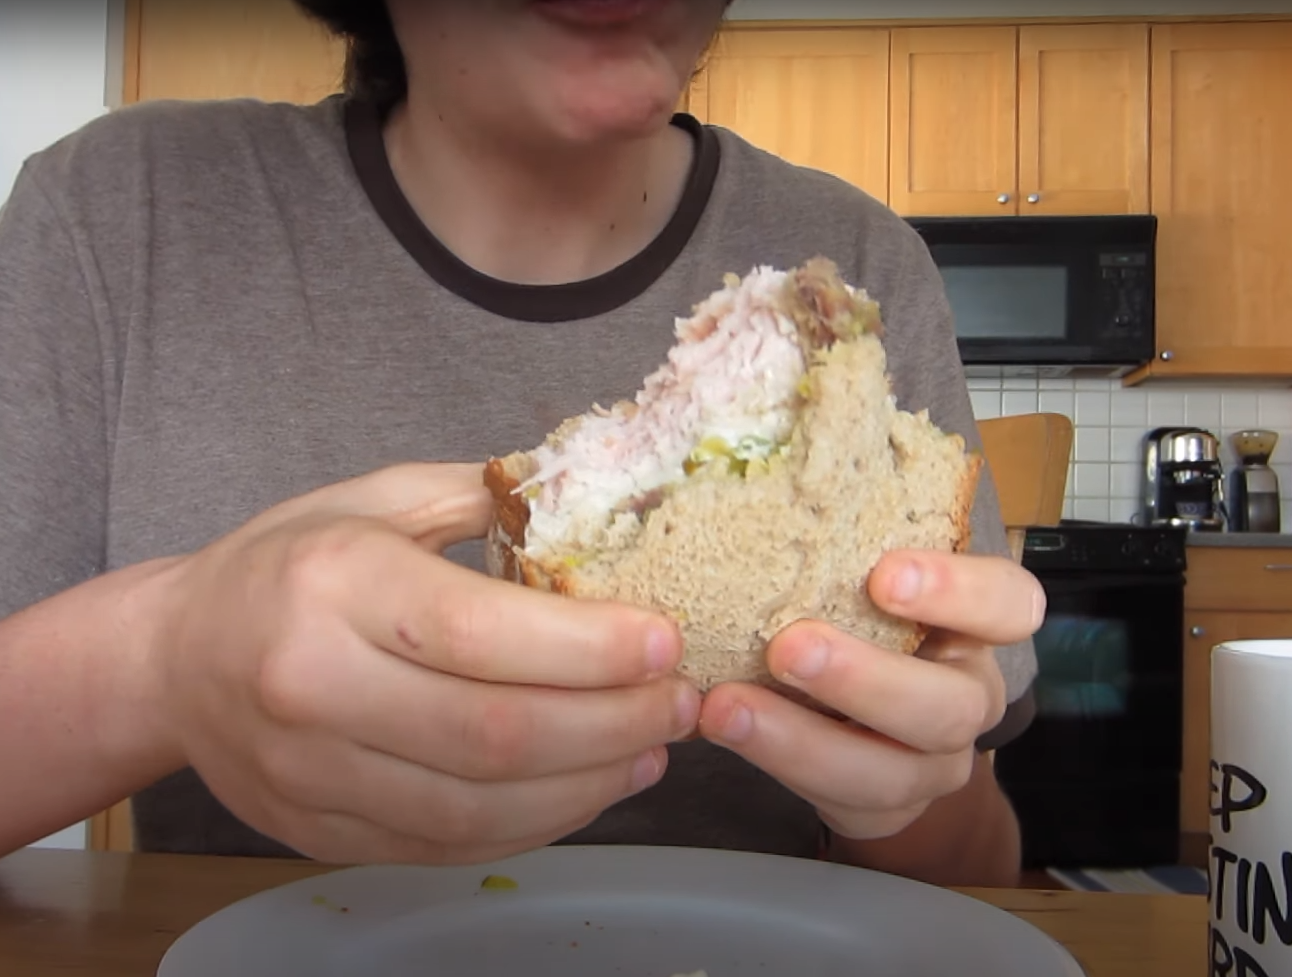  Kako jesti sendvič s puno priloga  